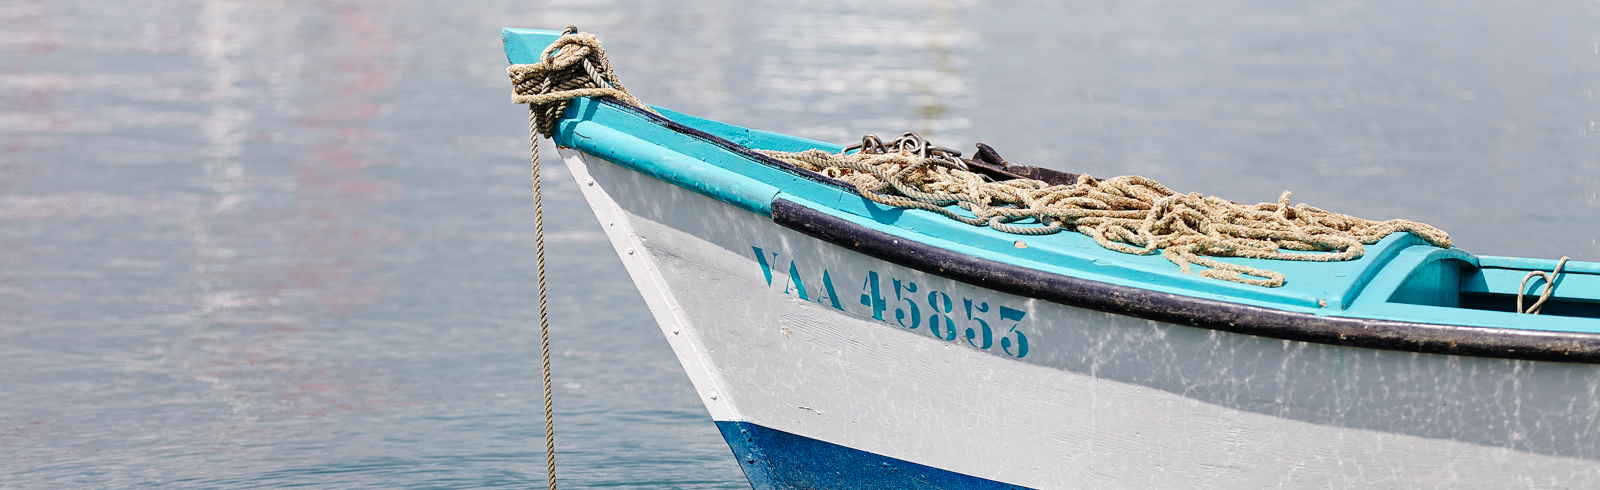 Où pratiquer la pêche en mer dans le Golfe du Morbihan ?